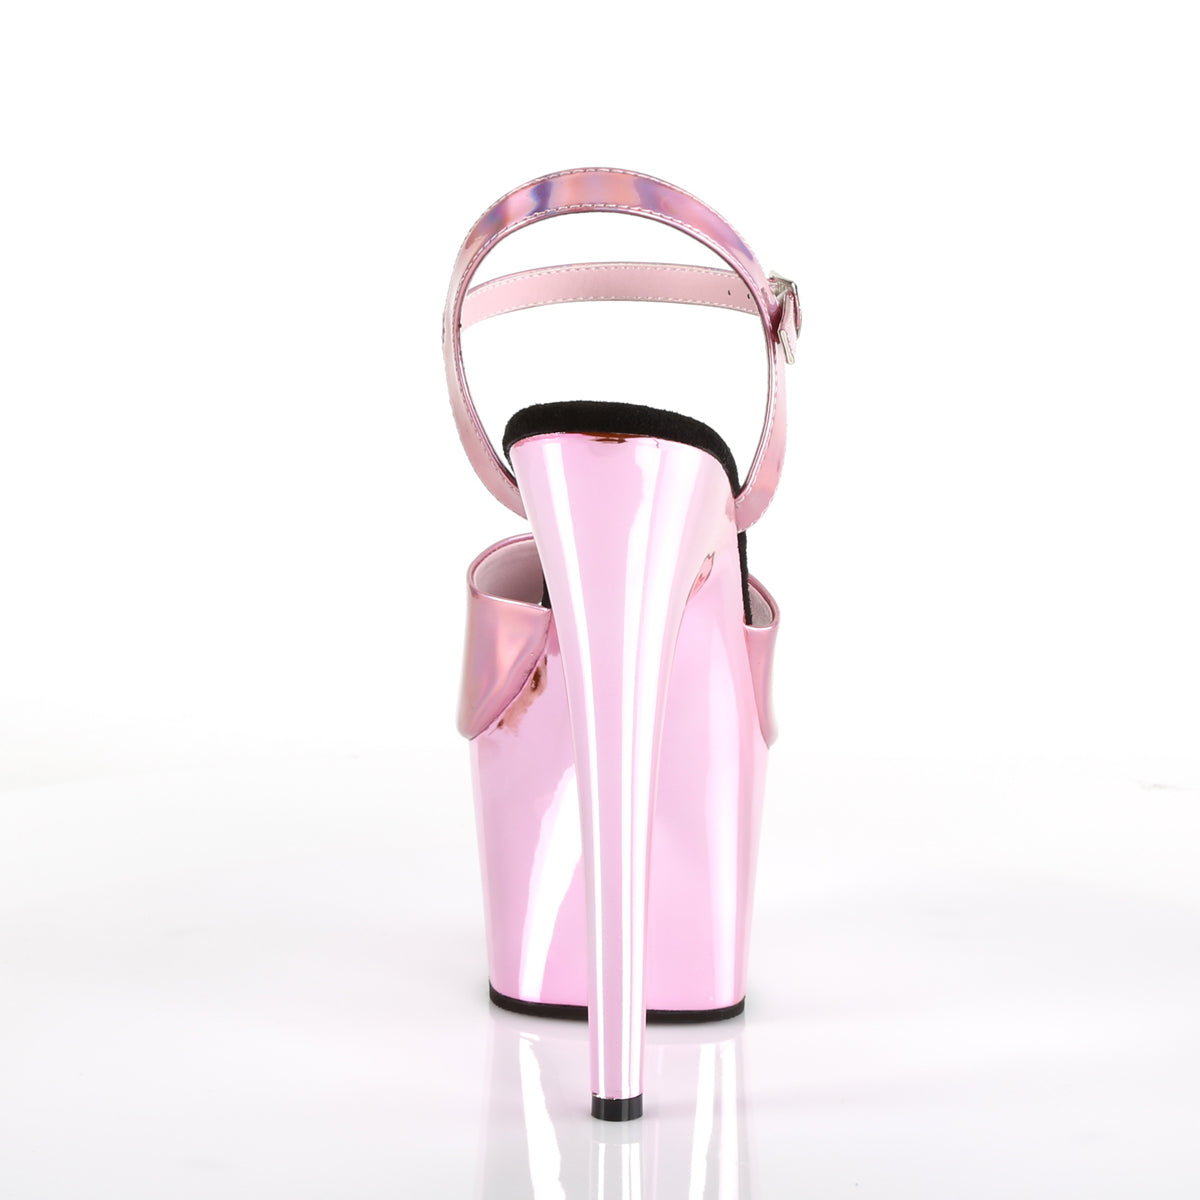 ADORE-709HGCH Baby Pink Hologram/Baby Pink Chrome Platform Sandal Pleaser